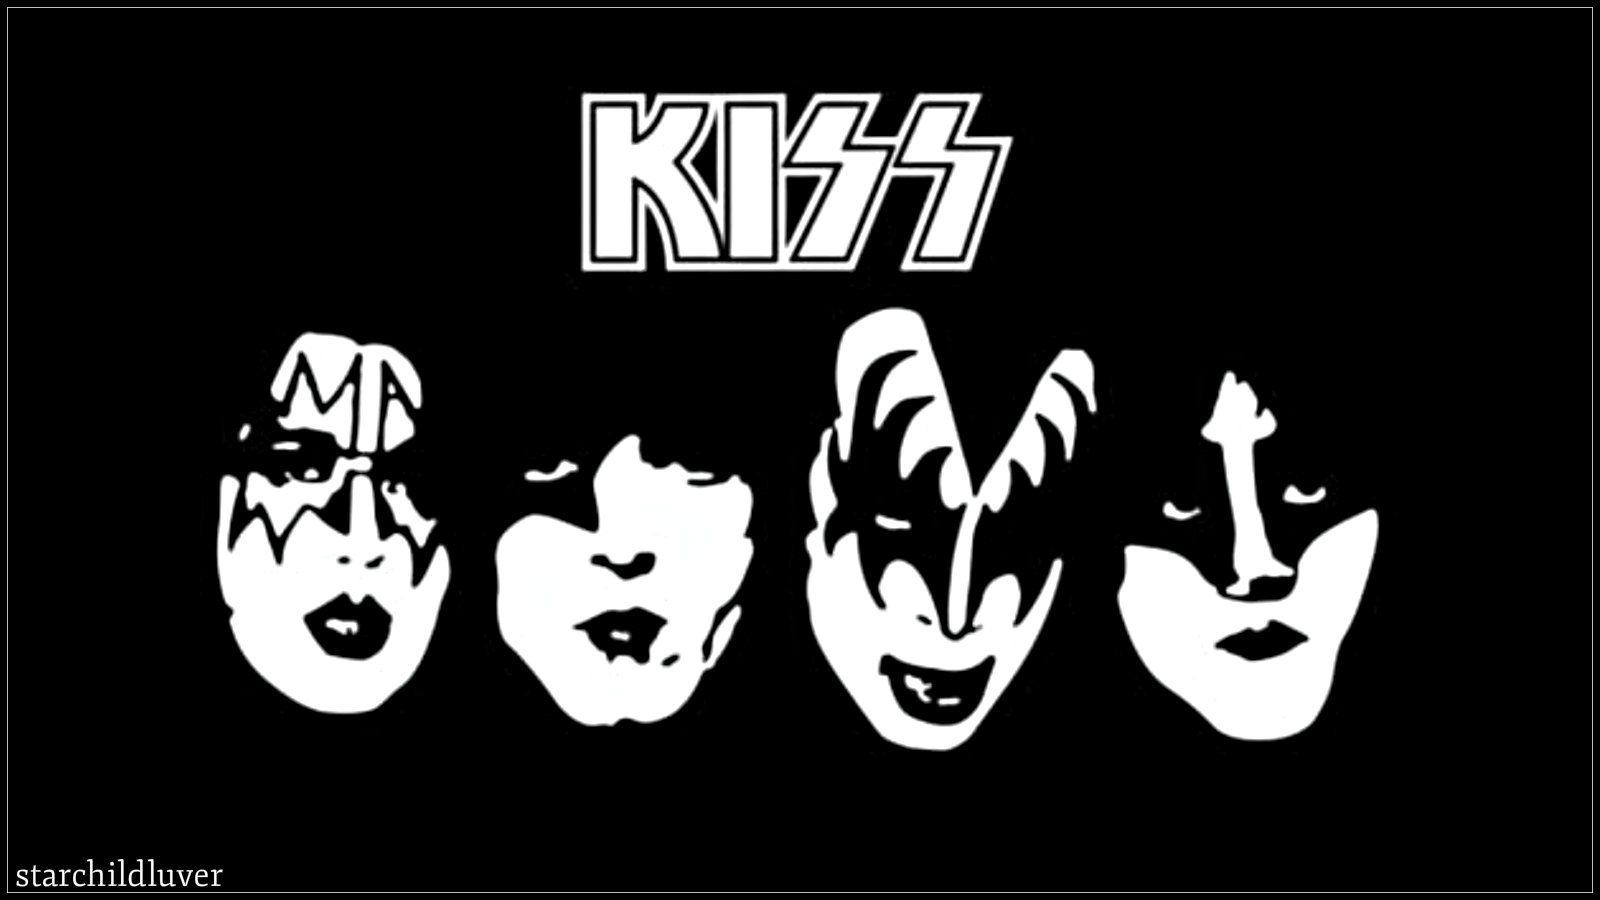 kiss logo. KISS KISS Paul, Ace, Gene and Eric Carr. Kiss music